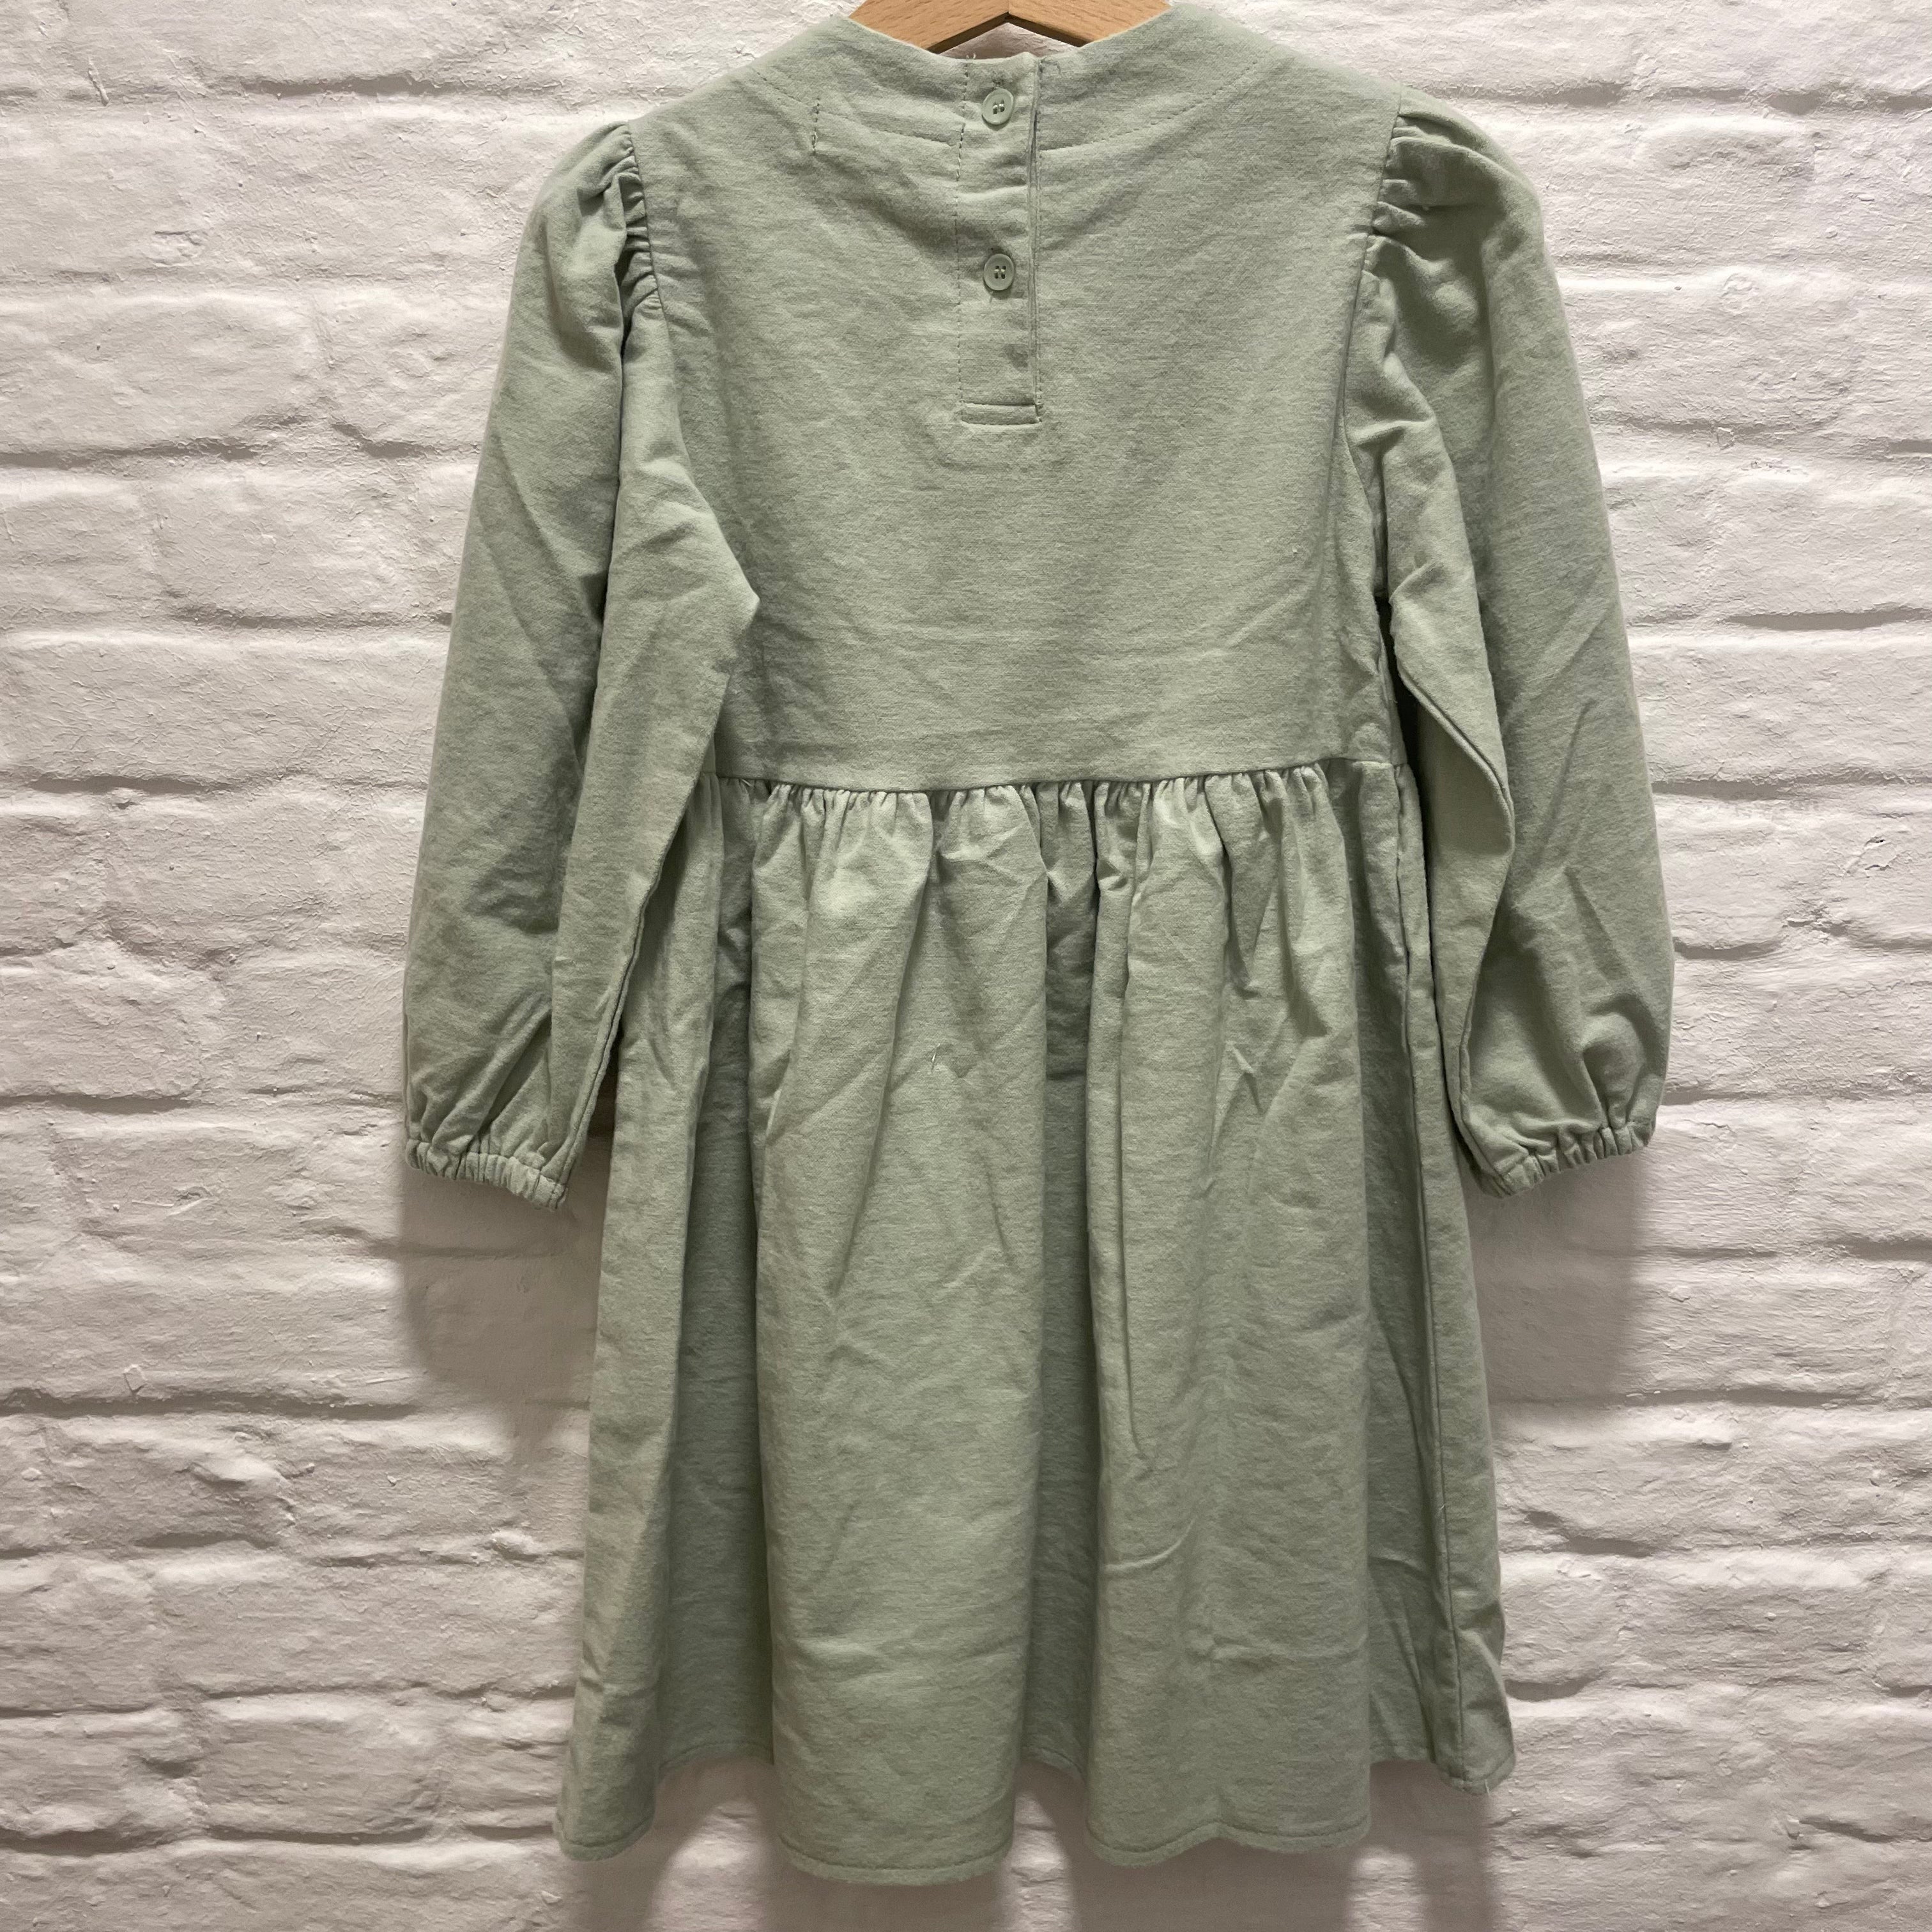 Hygge Selection - dewey dress - mint